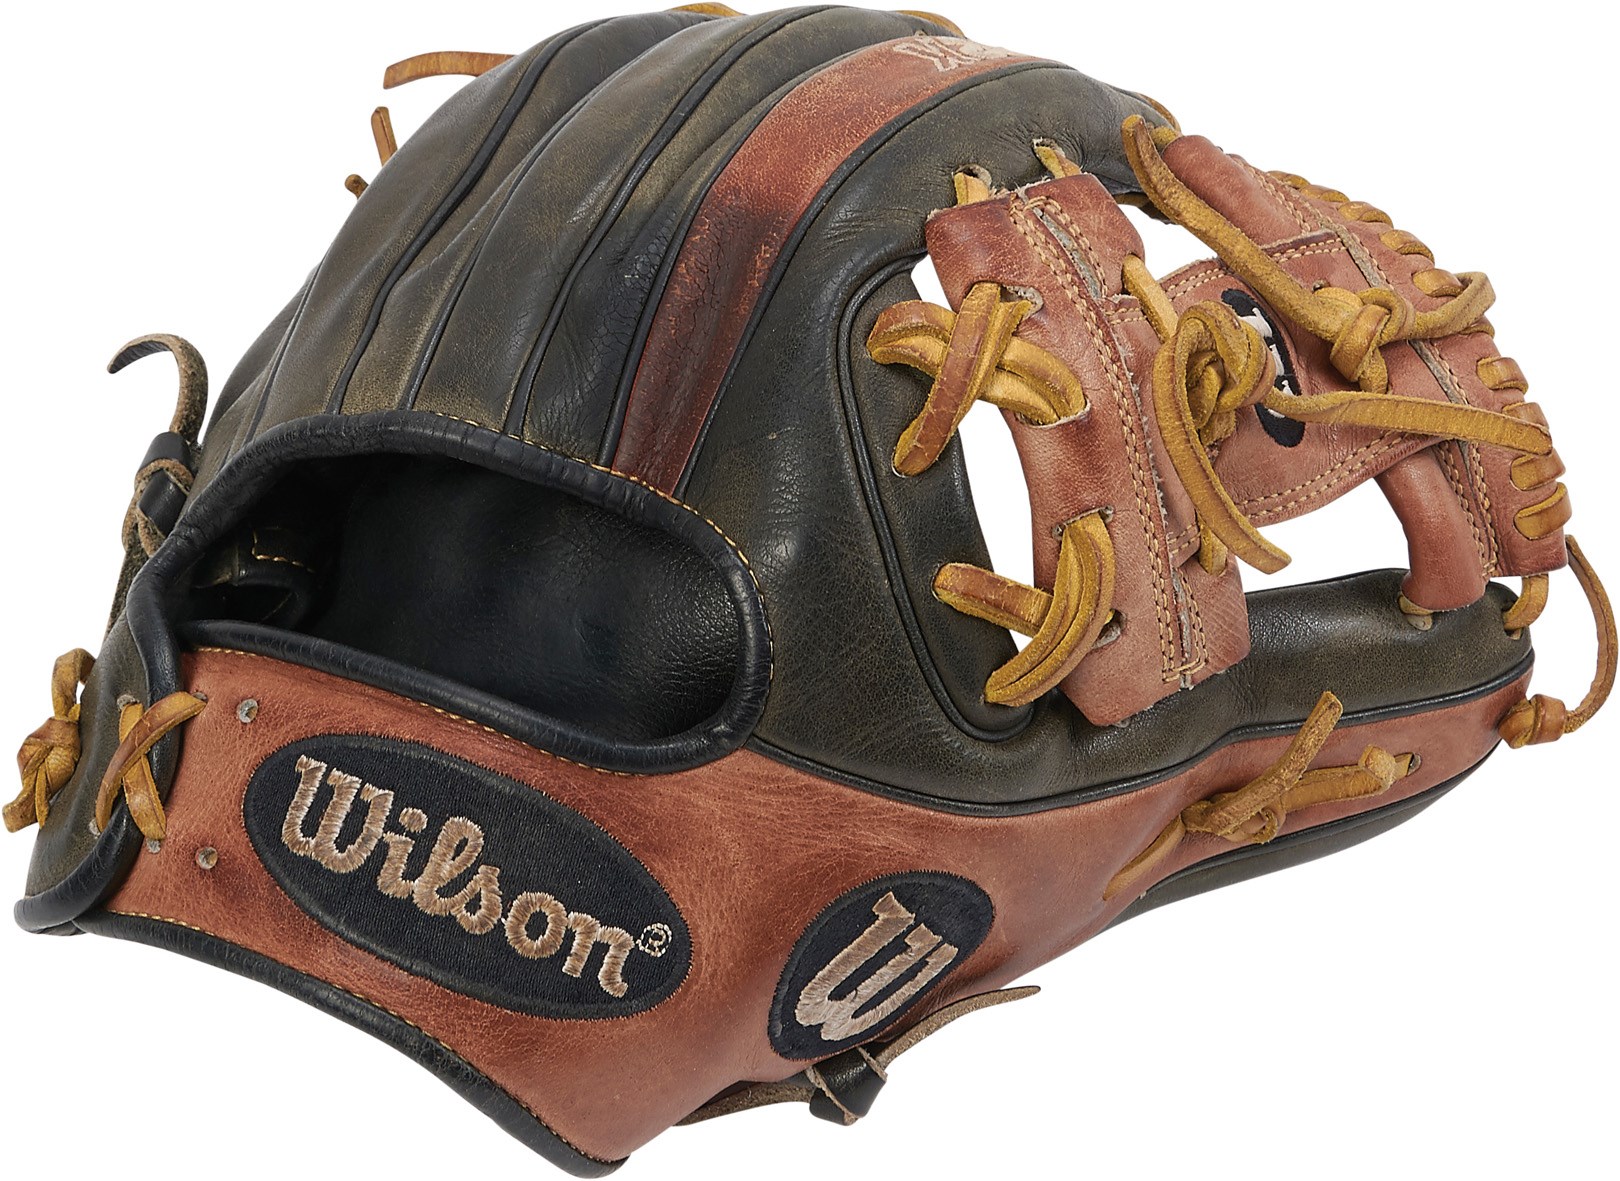 Baseball Equipment - 2014 Jose Altuve Game Worn Fielder's Glove